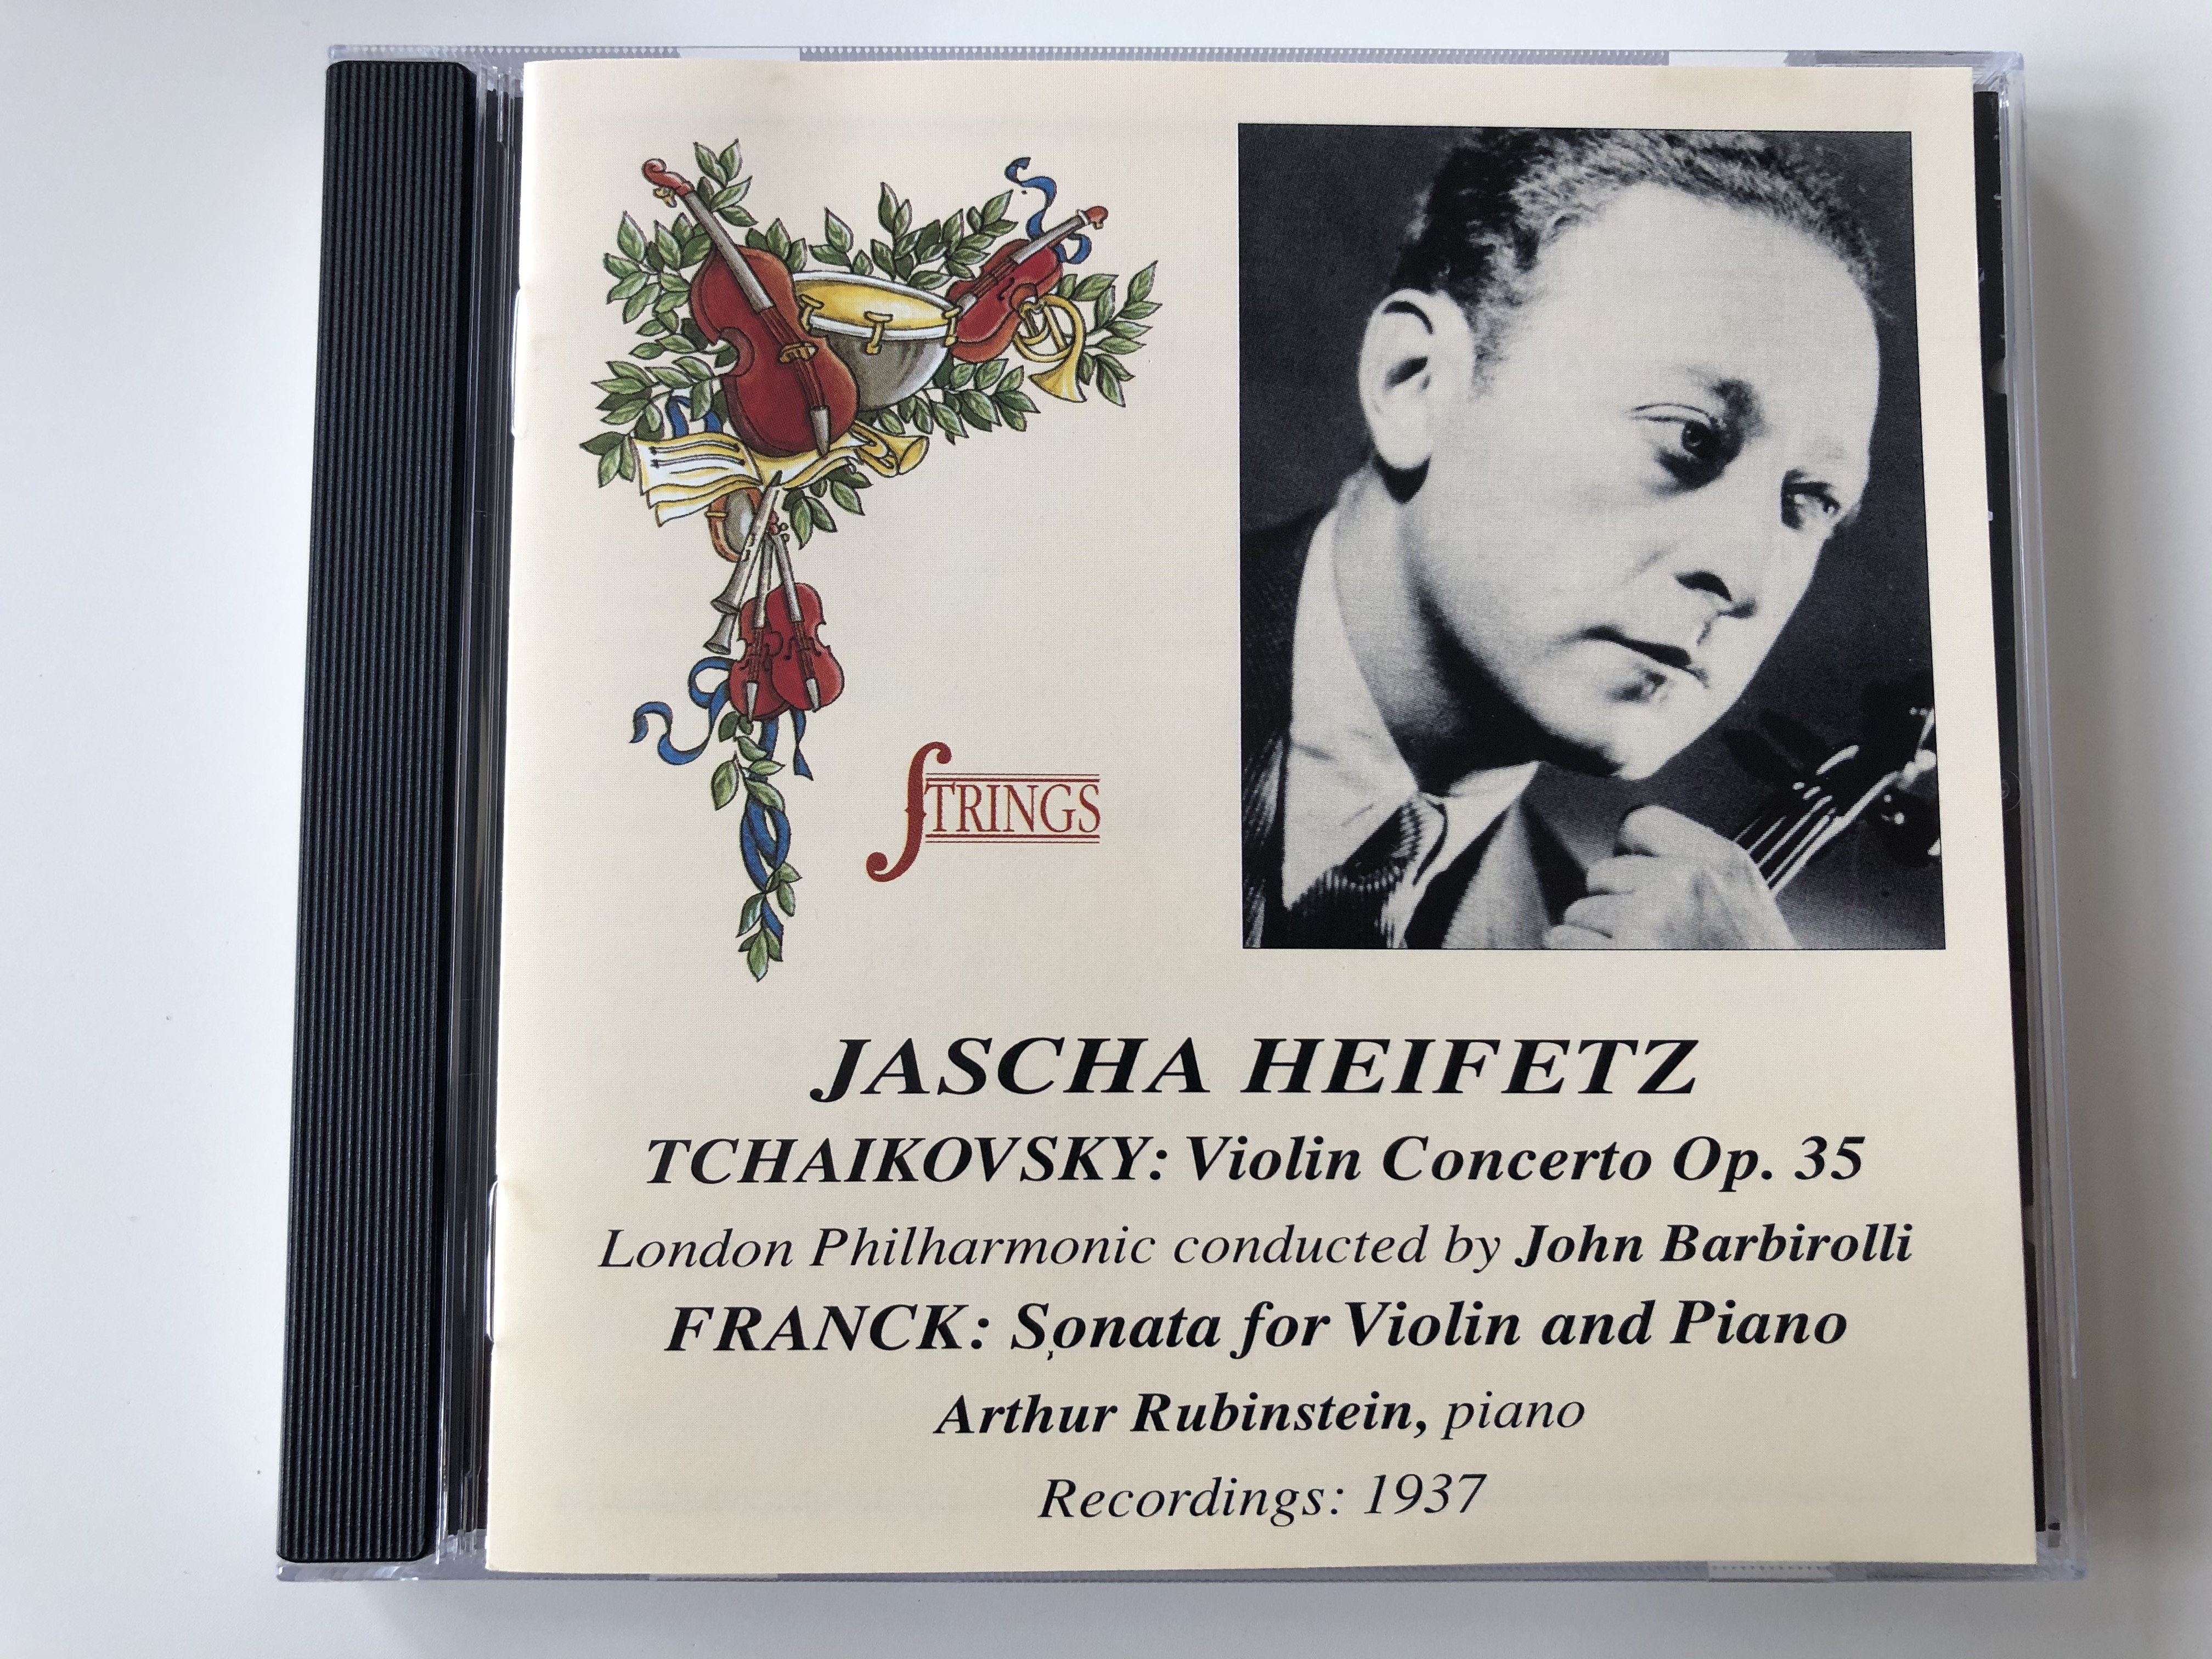 jascha-heifetz-tchaikovsky-violin-cocnerto-op.-35-london-philharmonic-conducted-by-john-barbirolli-franck-sonata-for-violin-and-piano-arthur-rubinstein-piano-recordings-1937-strings-audio-1-.jpg